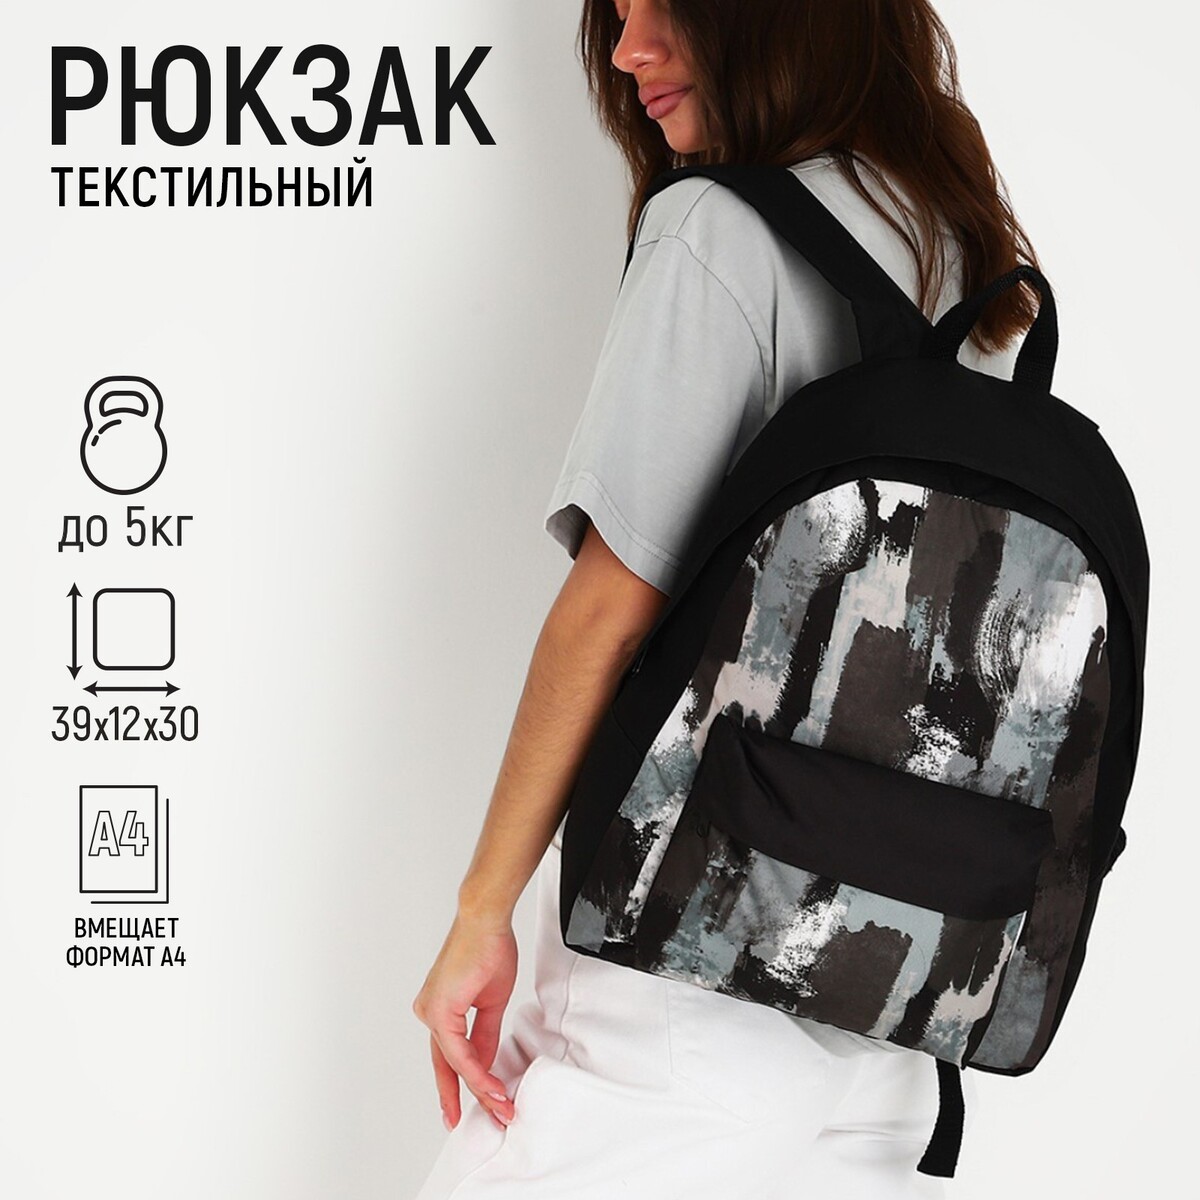 Рюкзак текстильный хаки, с карманом, 30х12х40см, цвет черный, серый рюкзак текстильный mystery с карманом 27 11 37